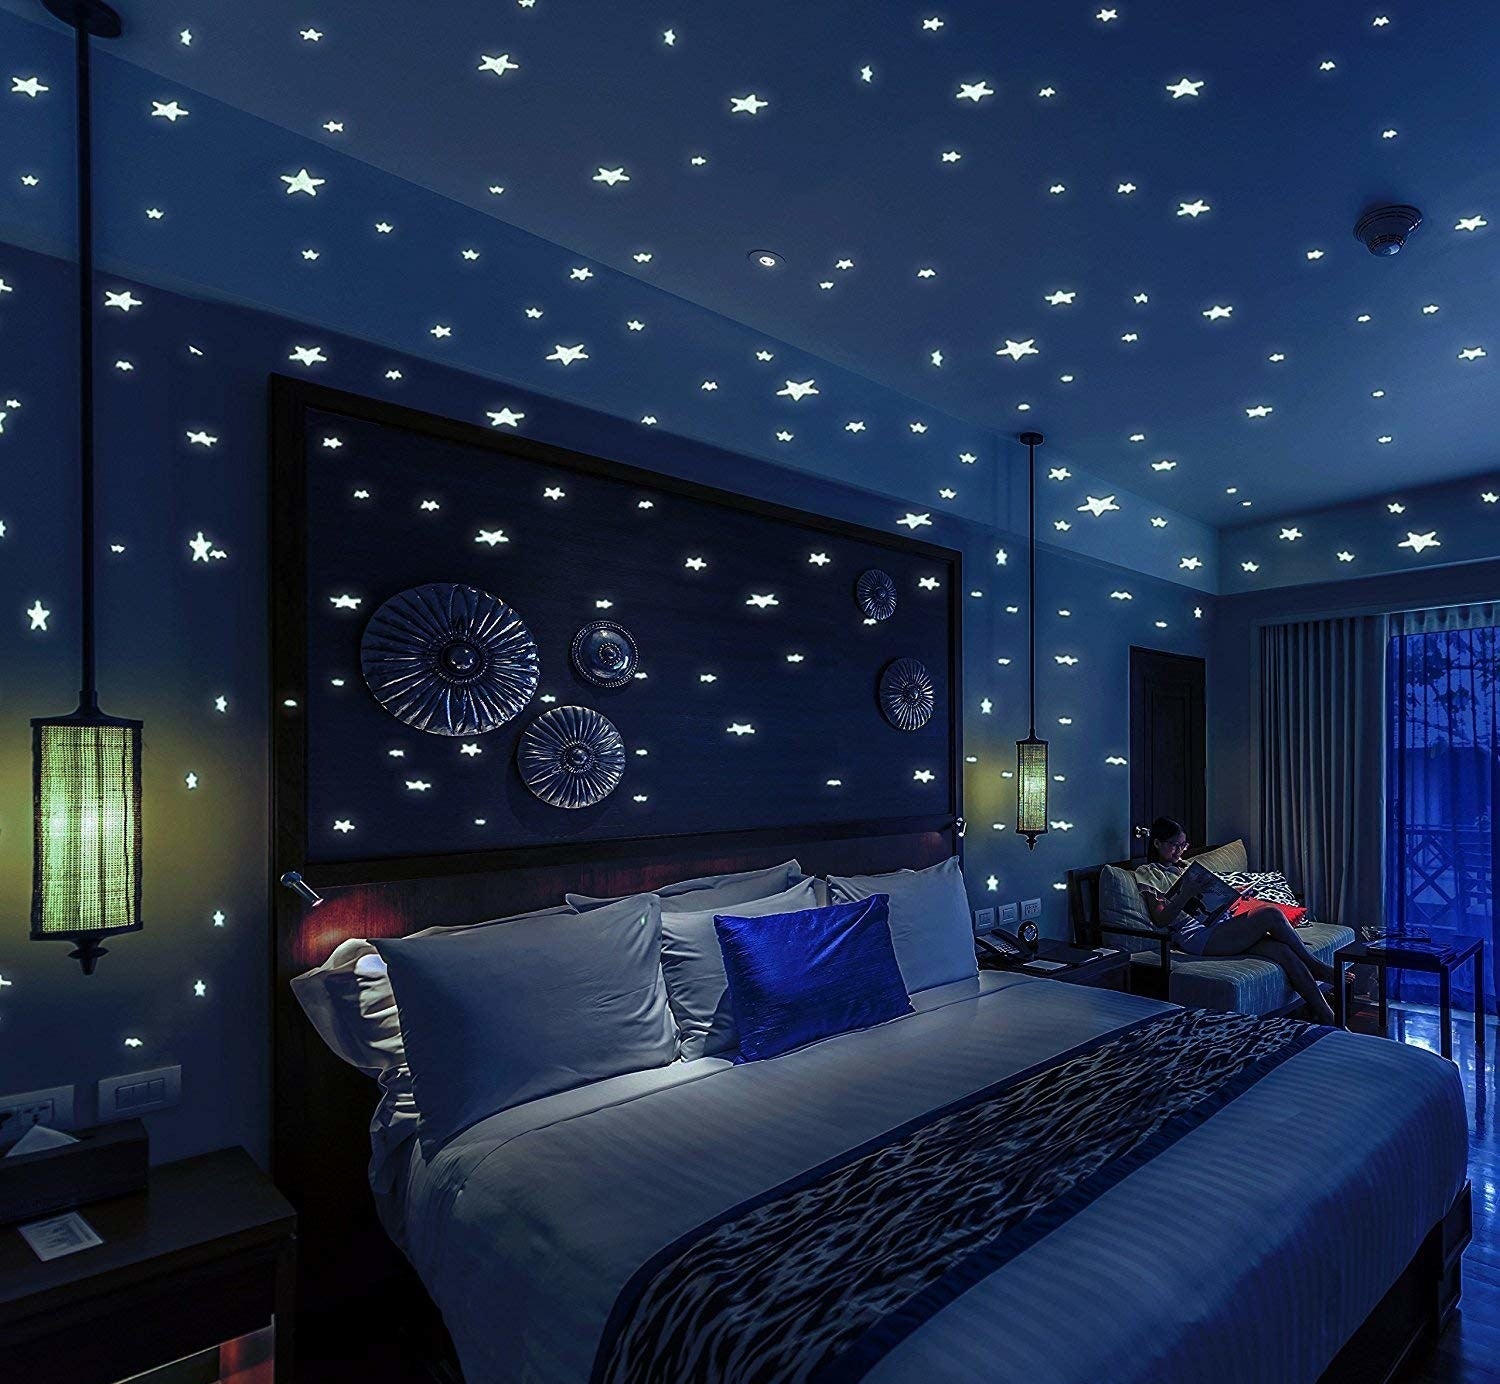 star stickers glowing in a dark bedroom